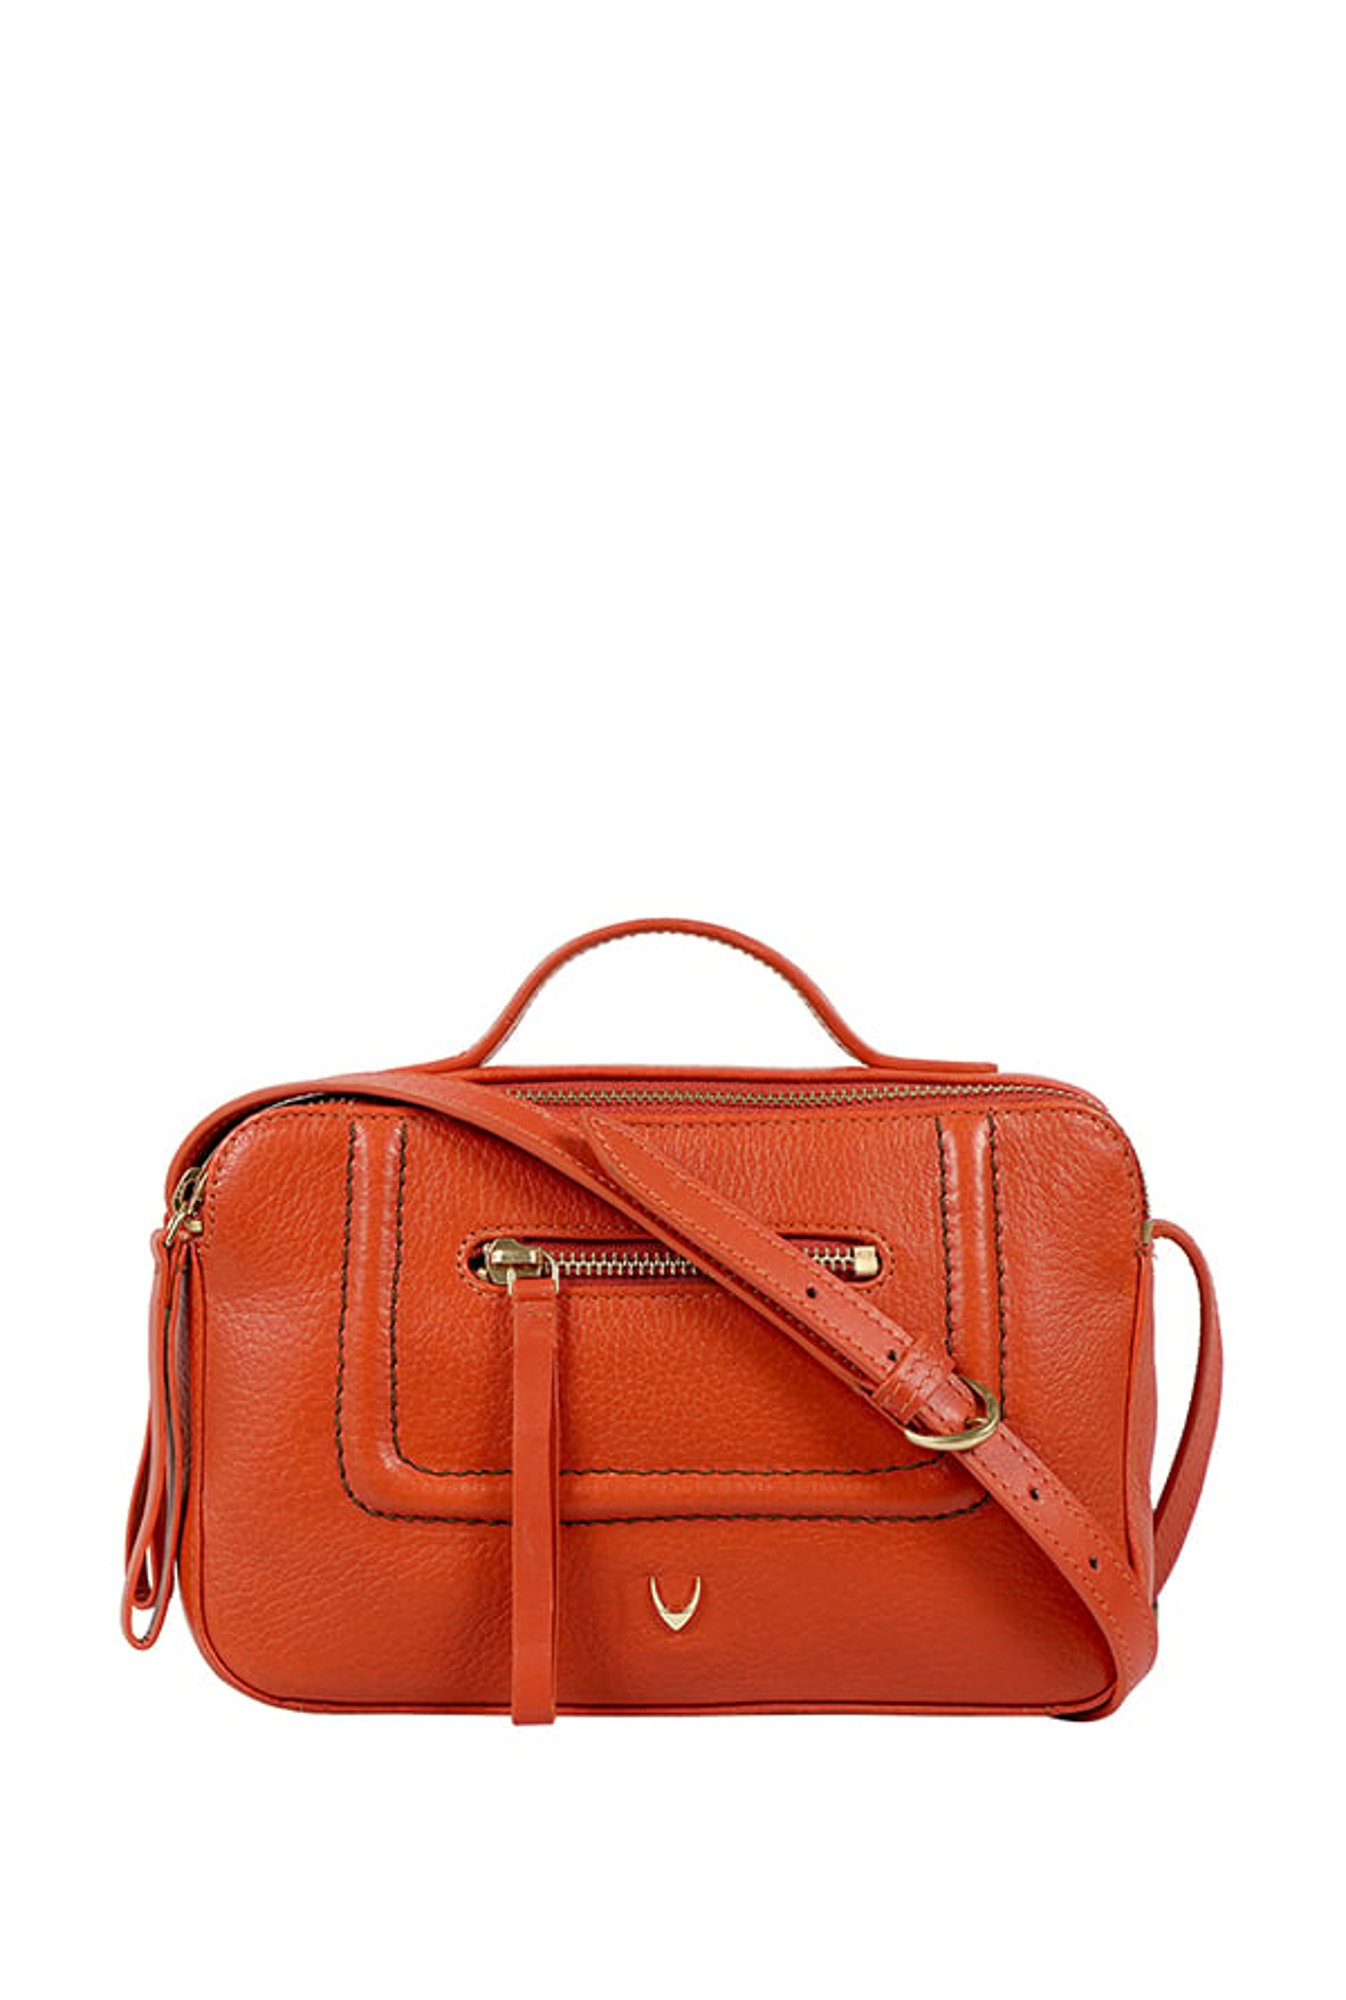 EASTHIDE Noah Orange Mini Sling Bag Buy EASTHIDE Noah Orange Mini Sling Bag  Online at Best Price in India  Nykaa